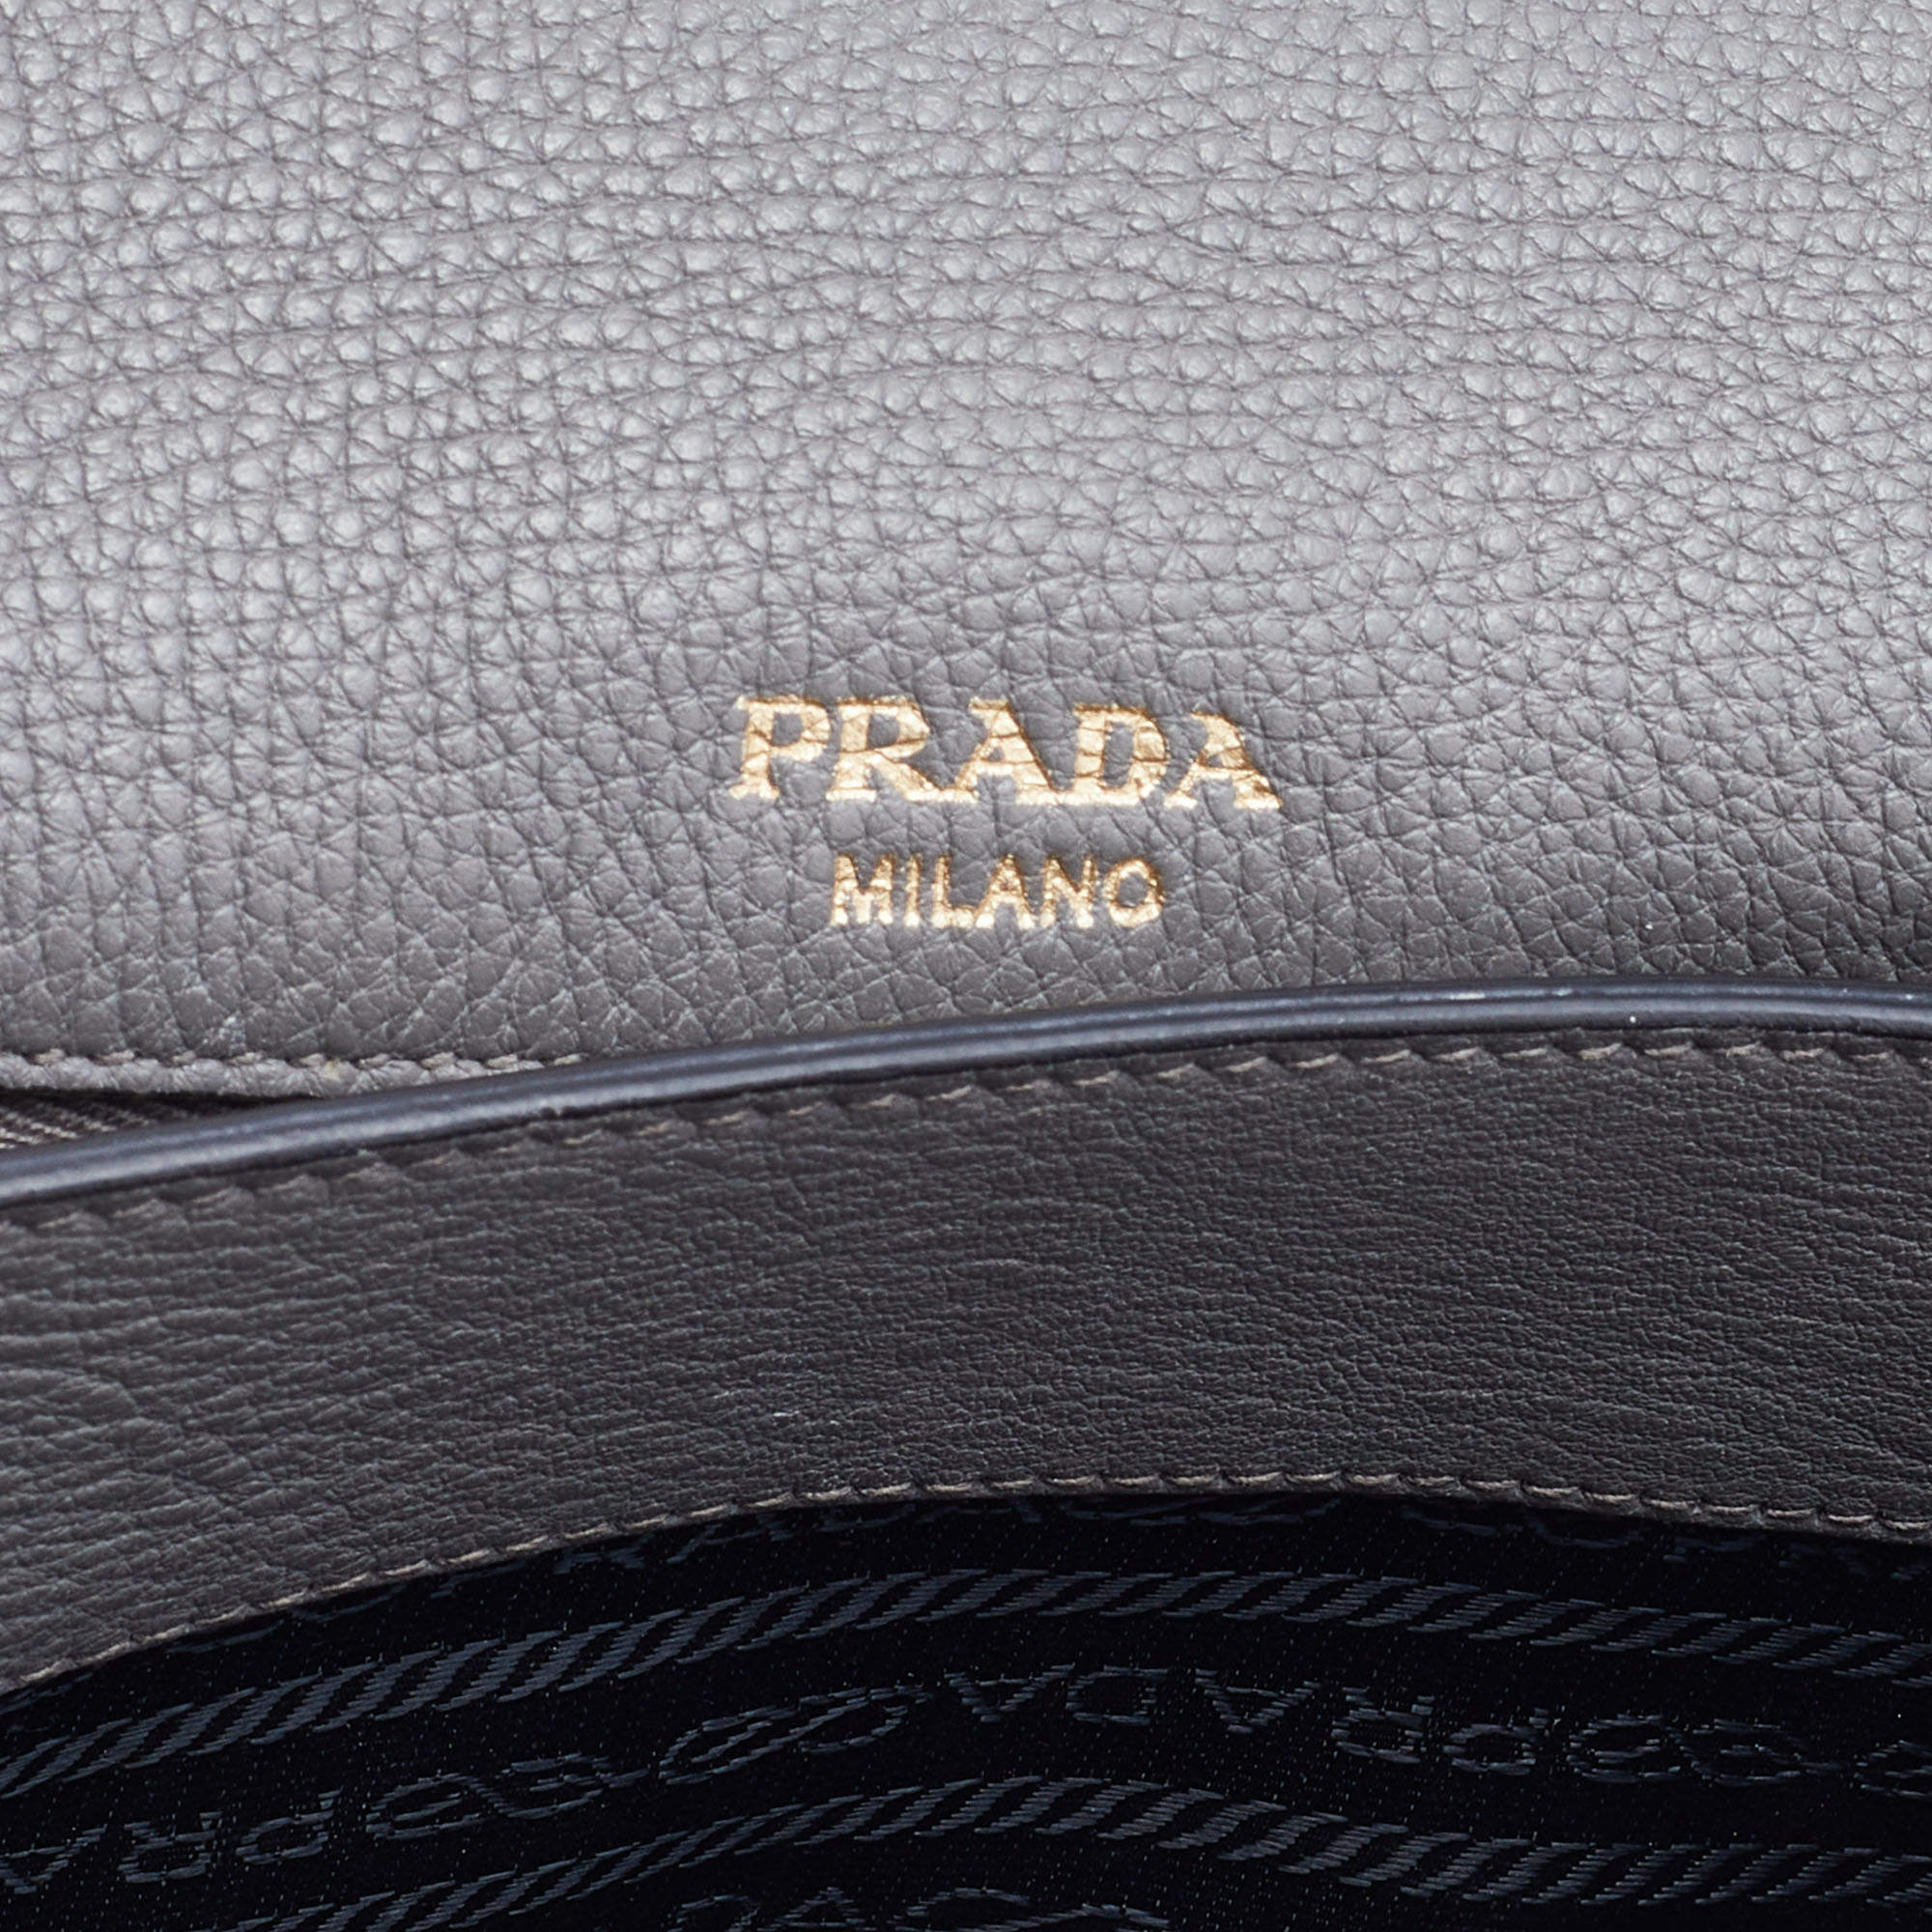 Leather crossbody bag Prada Grey in Leather - 30550632